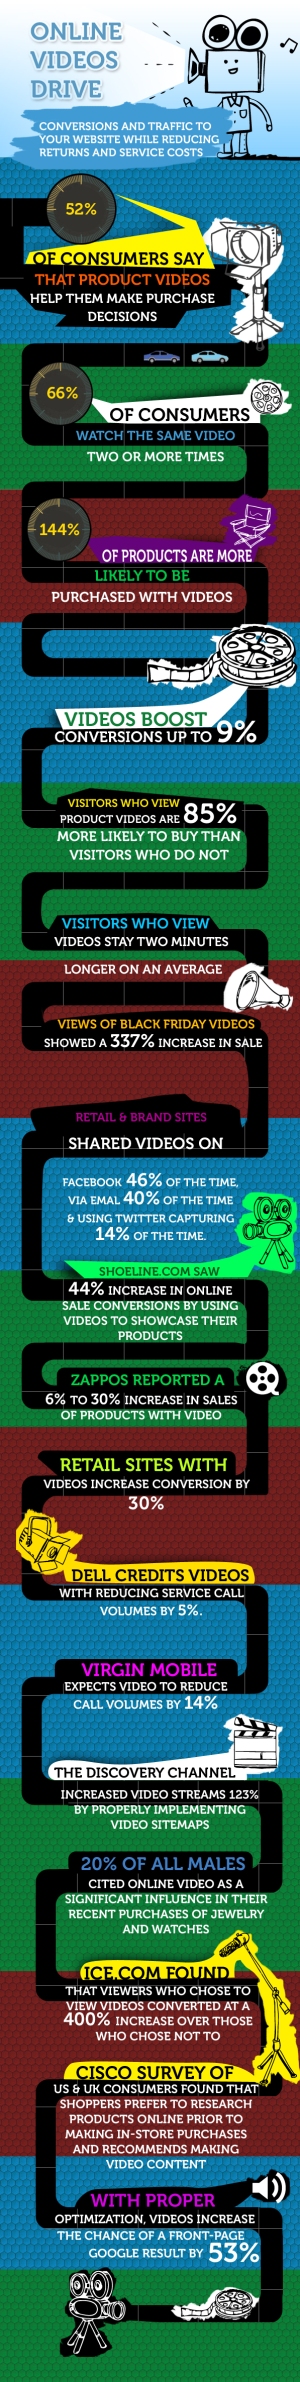 video-marketing-impact